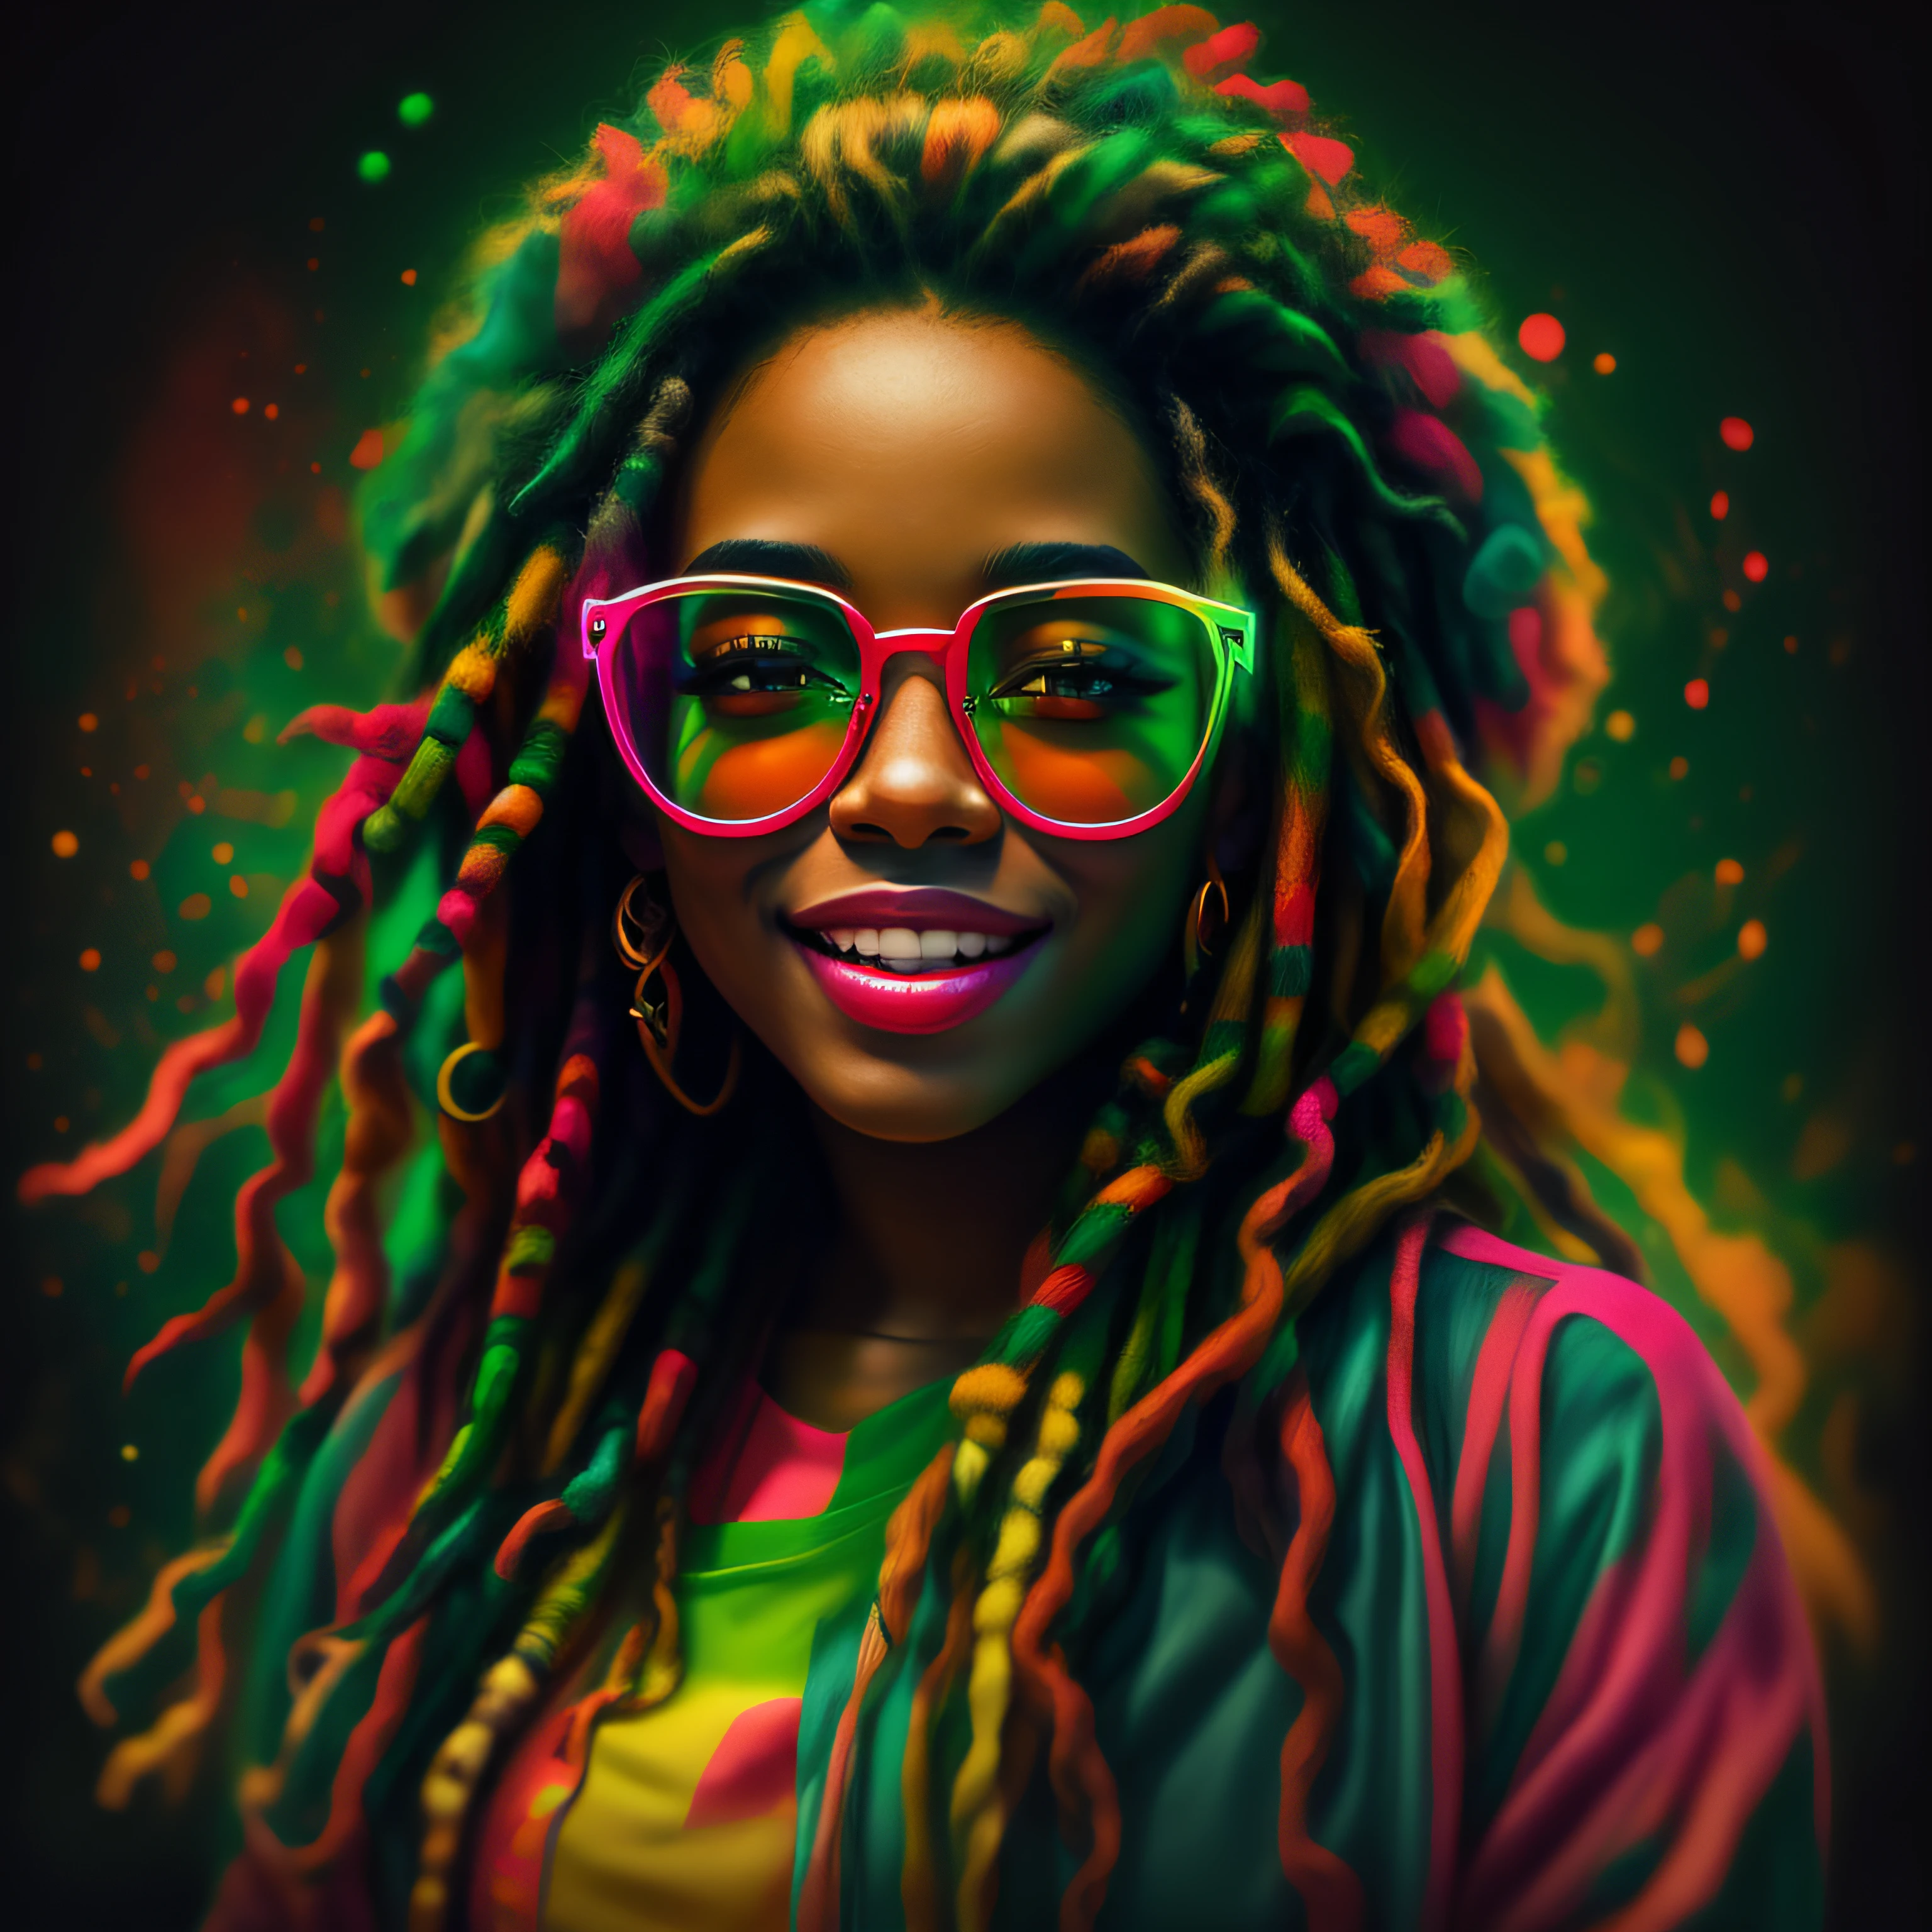 arte vectorial, arte borroso (1 chica rasta sonriendo con ropa de color reggae) mafia, iluminación cinematográfica estilo neón, salpicado de tinta